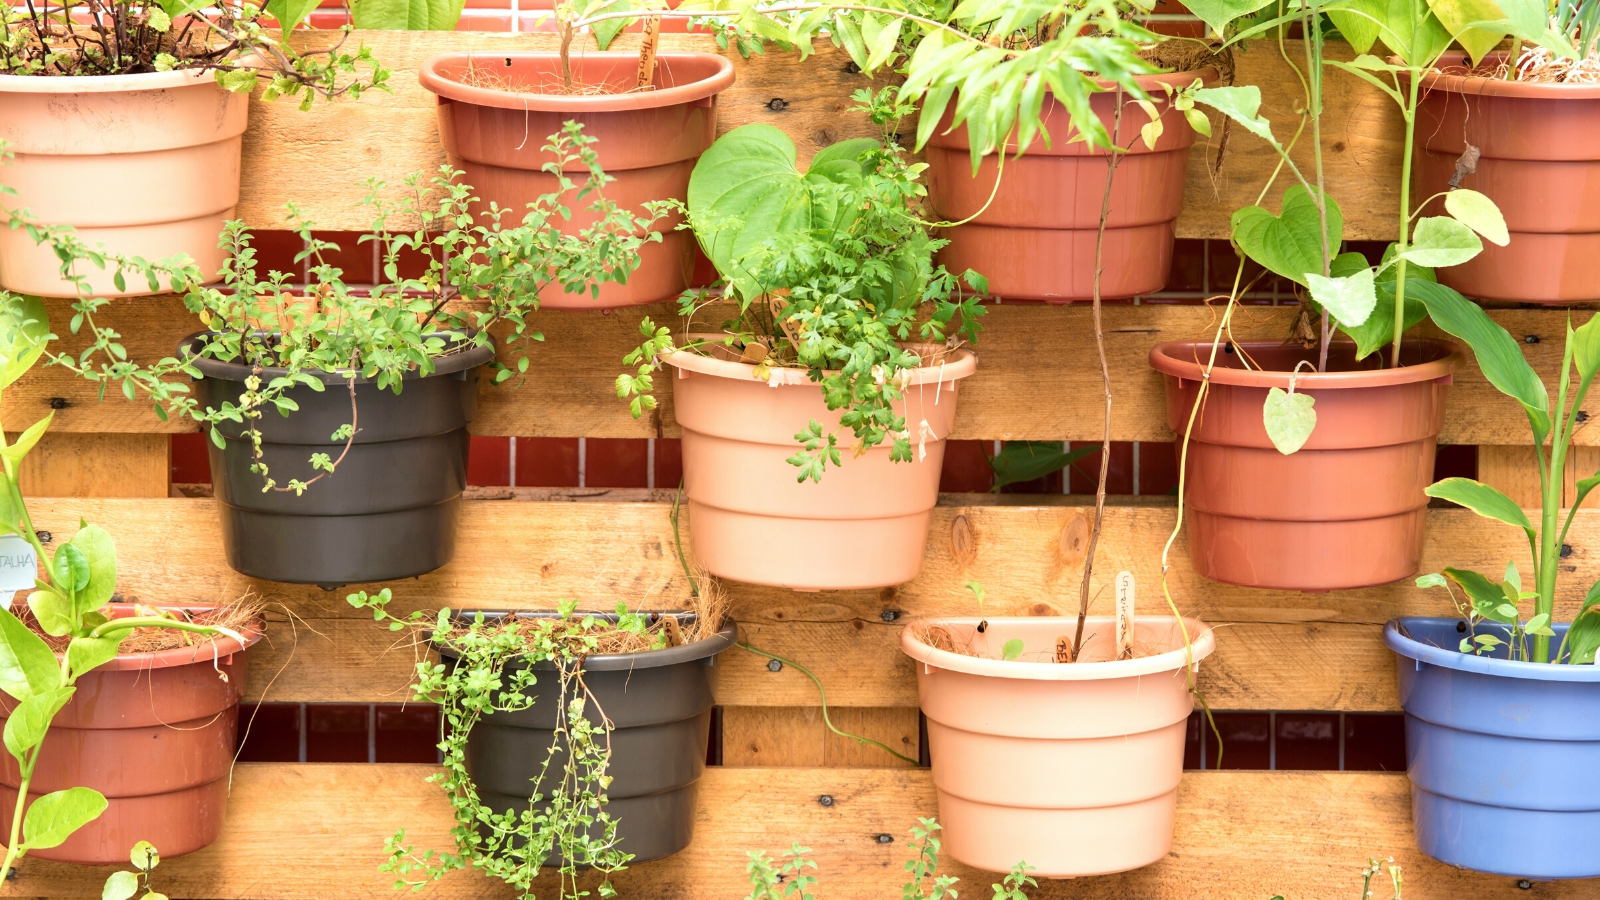 Vertical Gardening: Minimizing Weeds In Your Garden